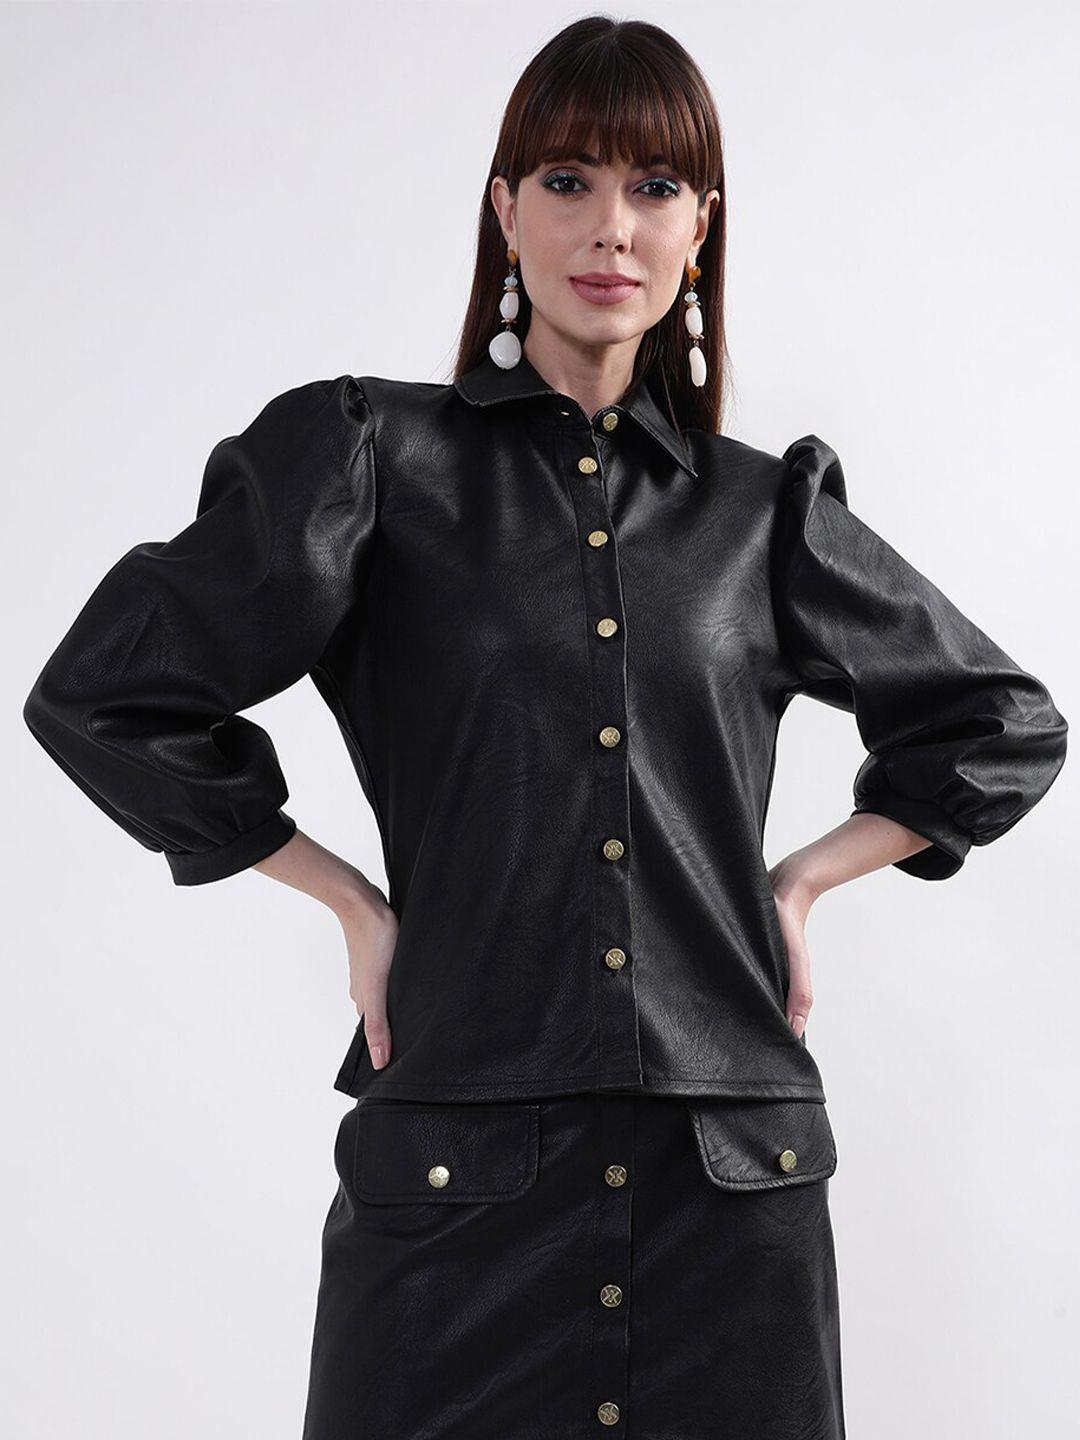 kendall & kylie women black shirt style top